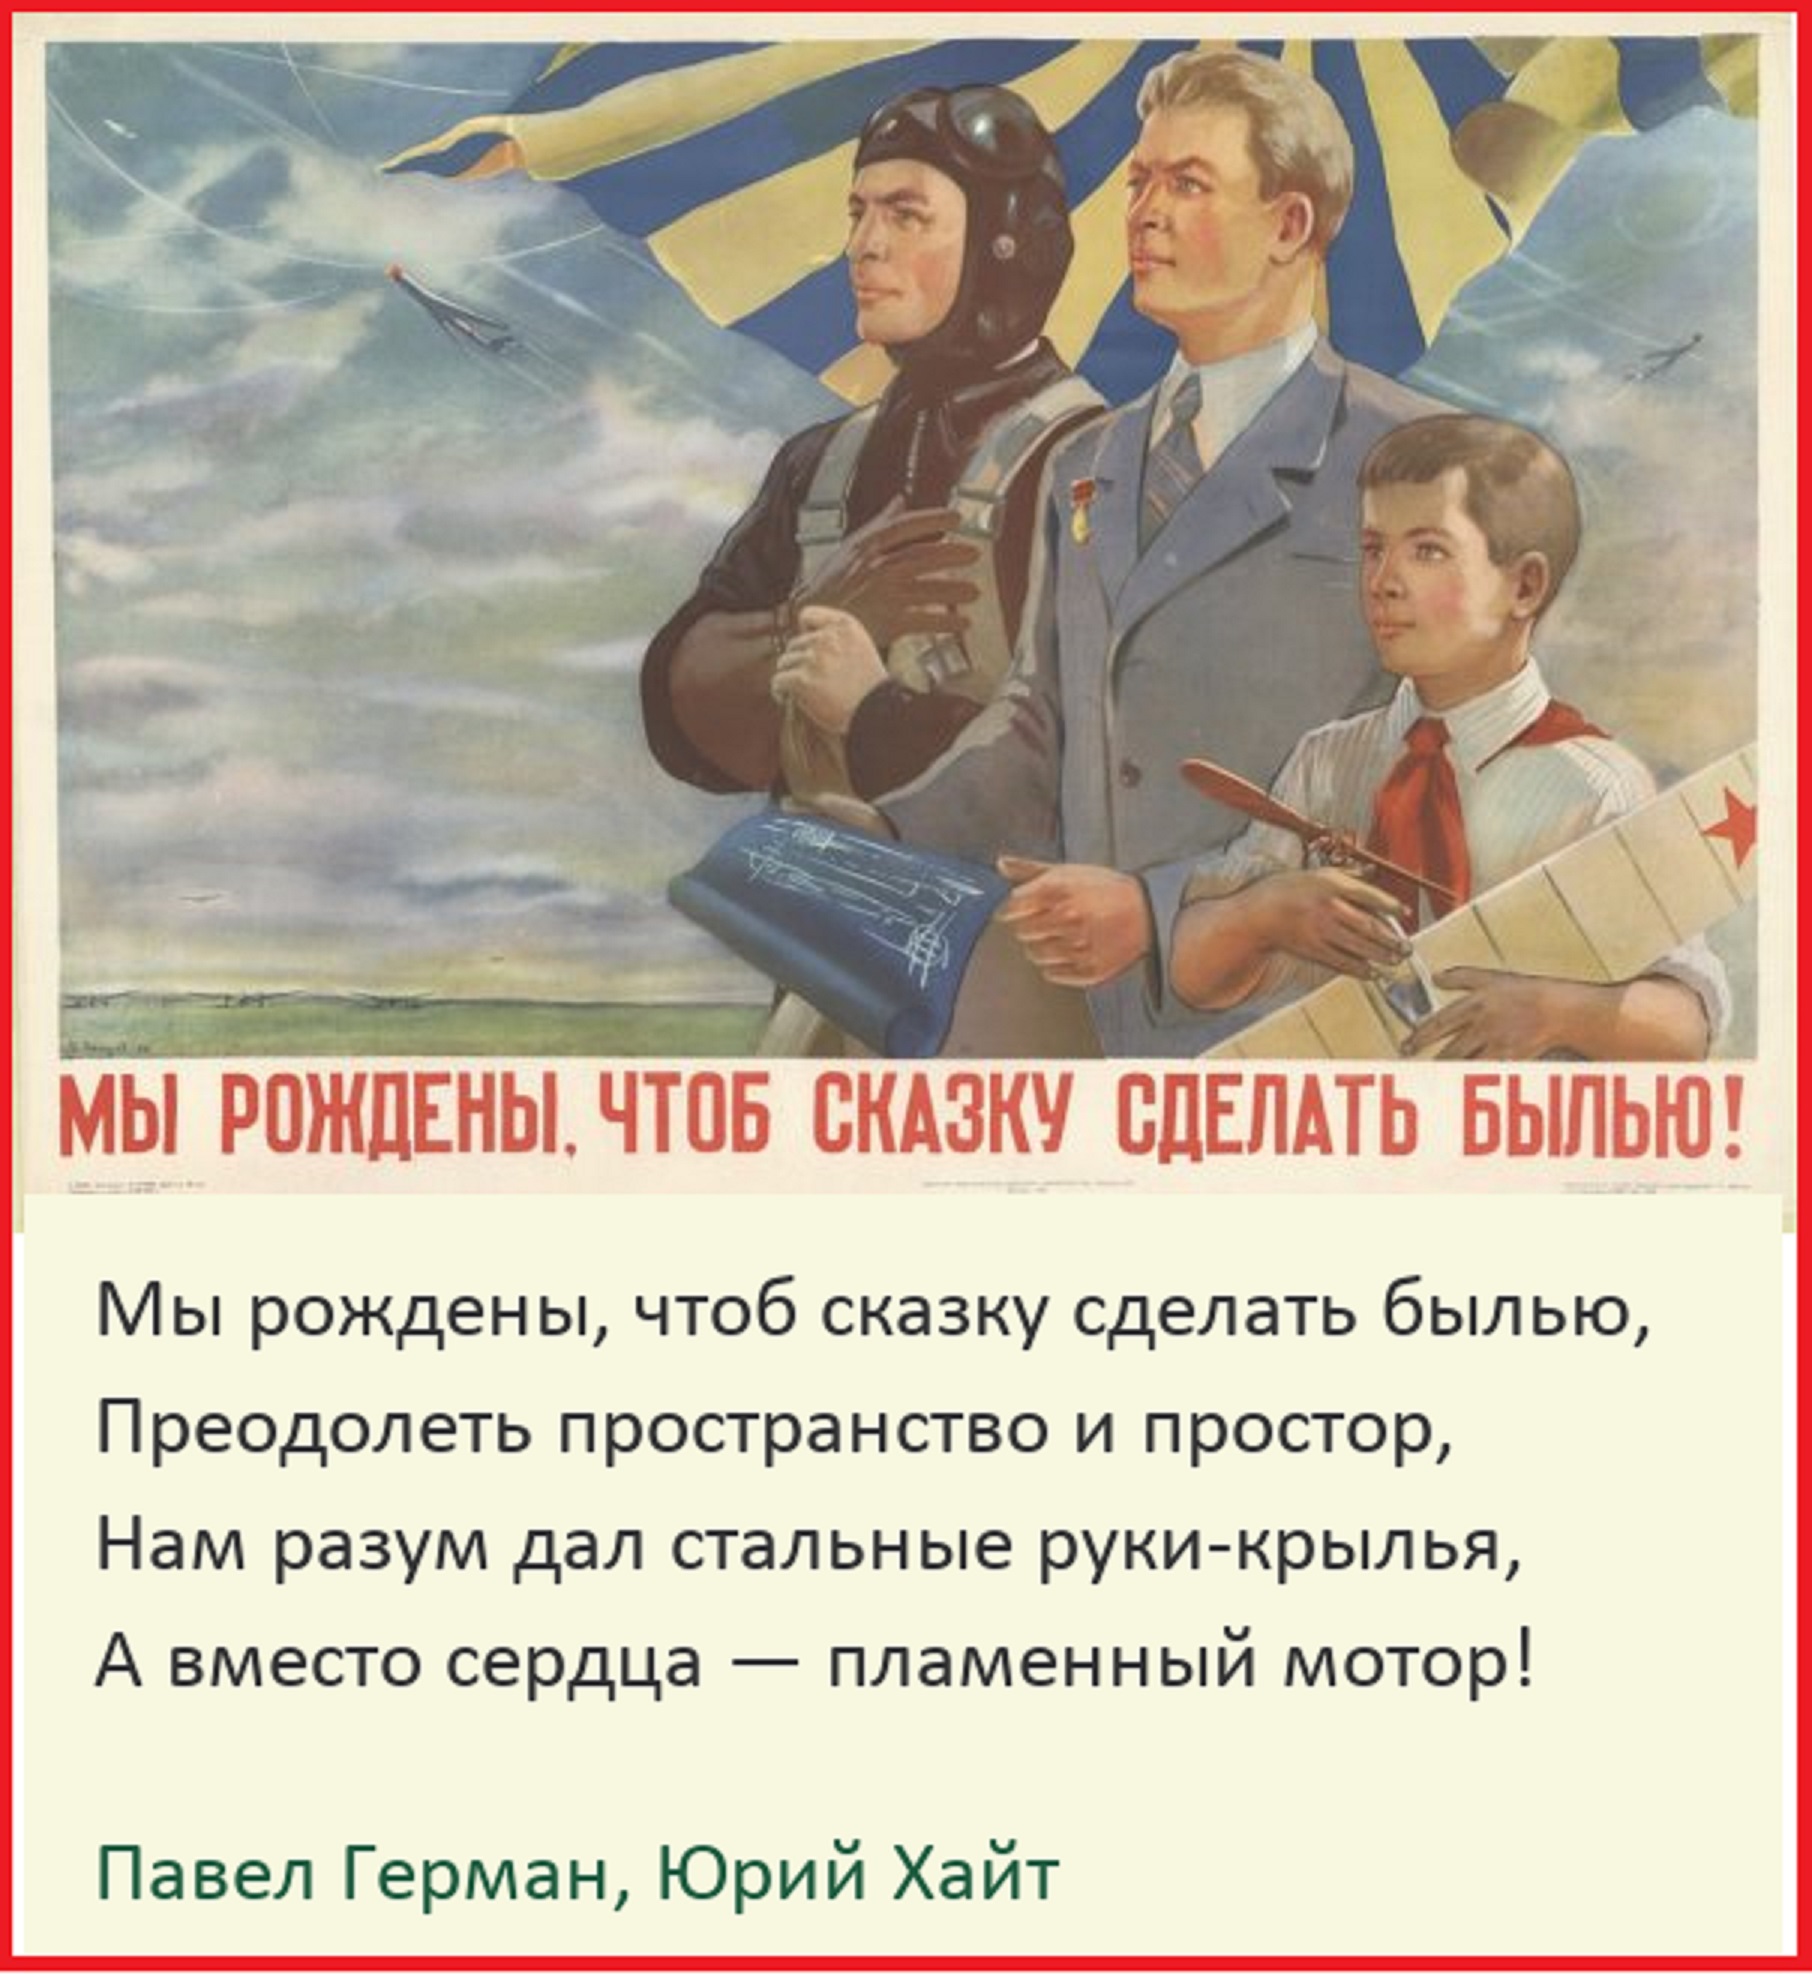 Плакат прошлых лет. Советские плакаты. Советские плакаты Авиация. Плакат летчик. Советские патриотические плакаты.